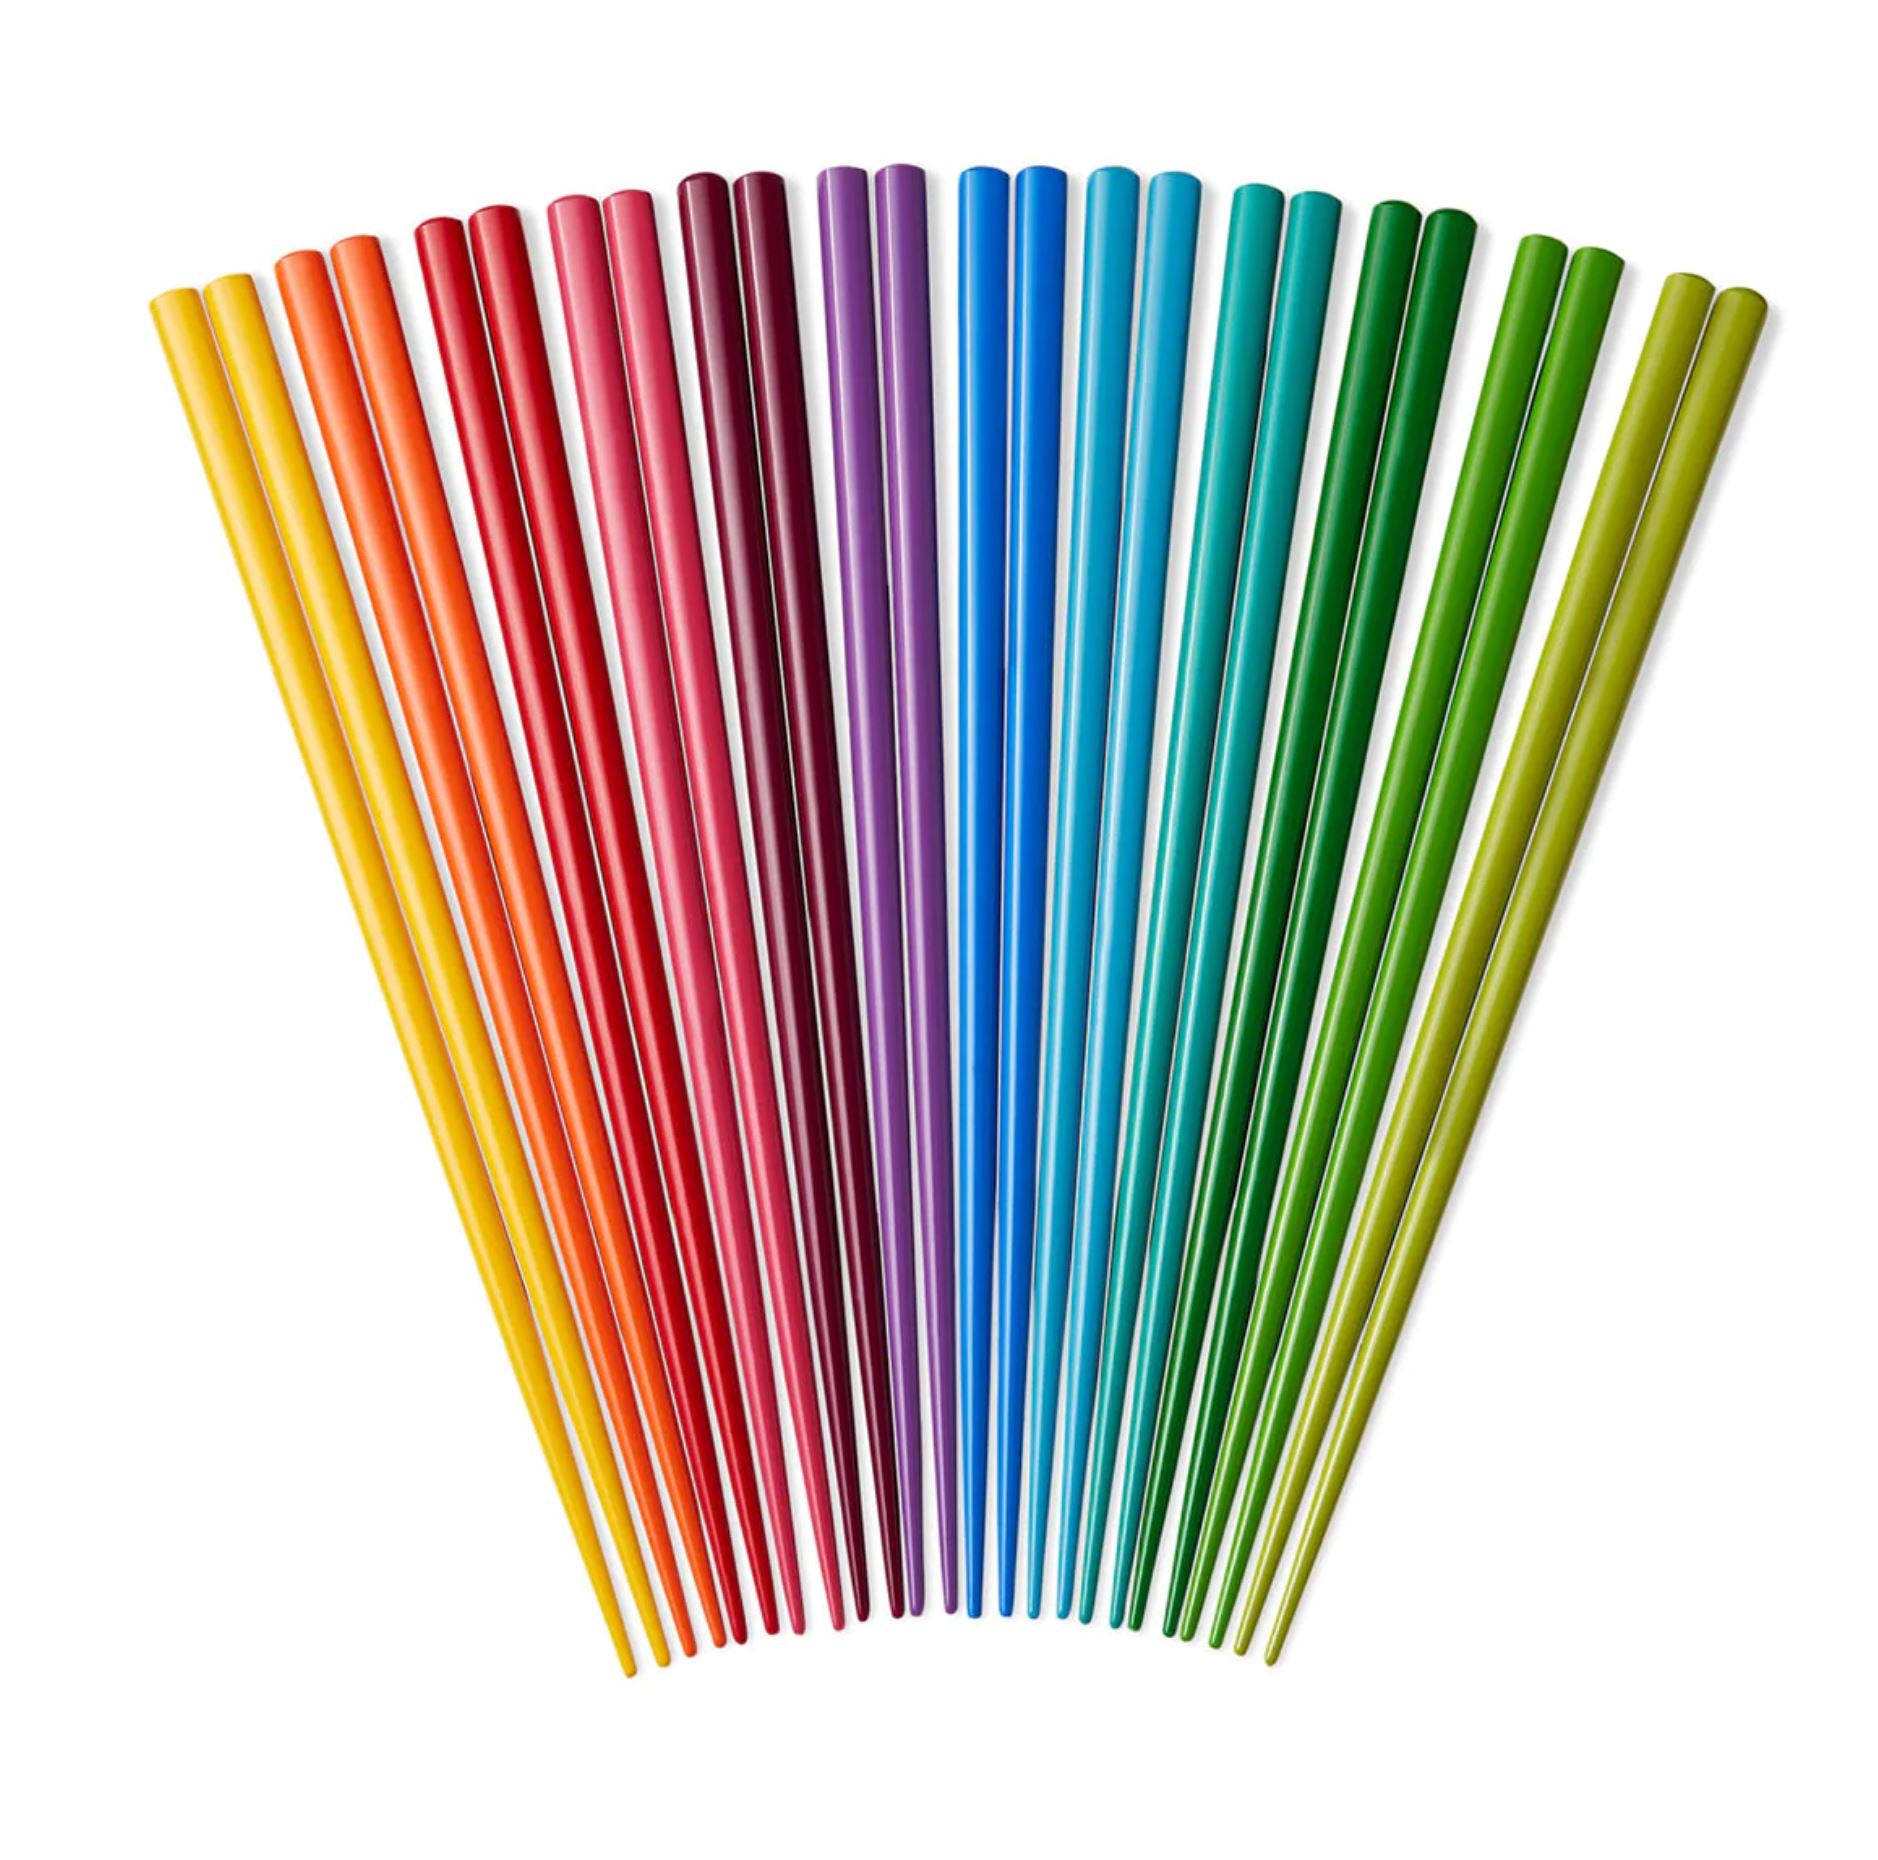 MoMa Rainbow Chopsticks (set of 12) - Third Drawer Down